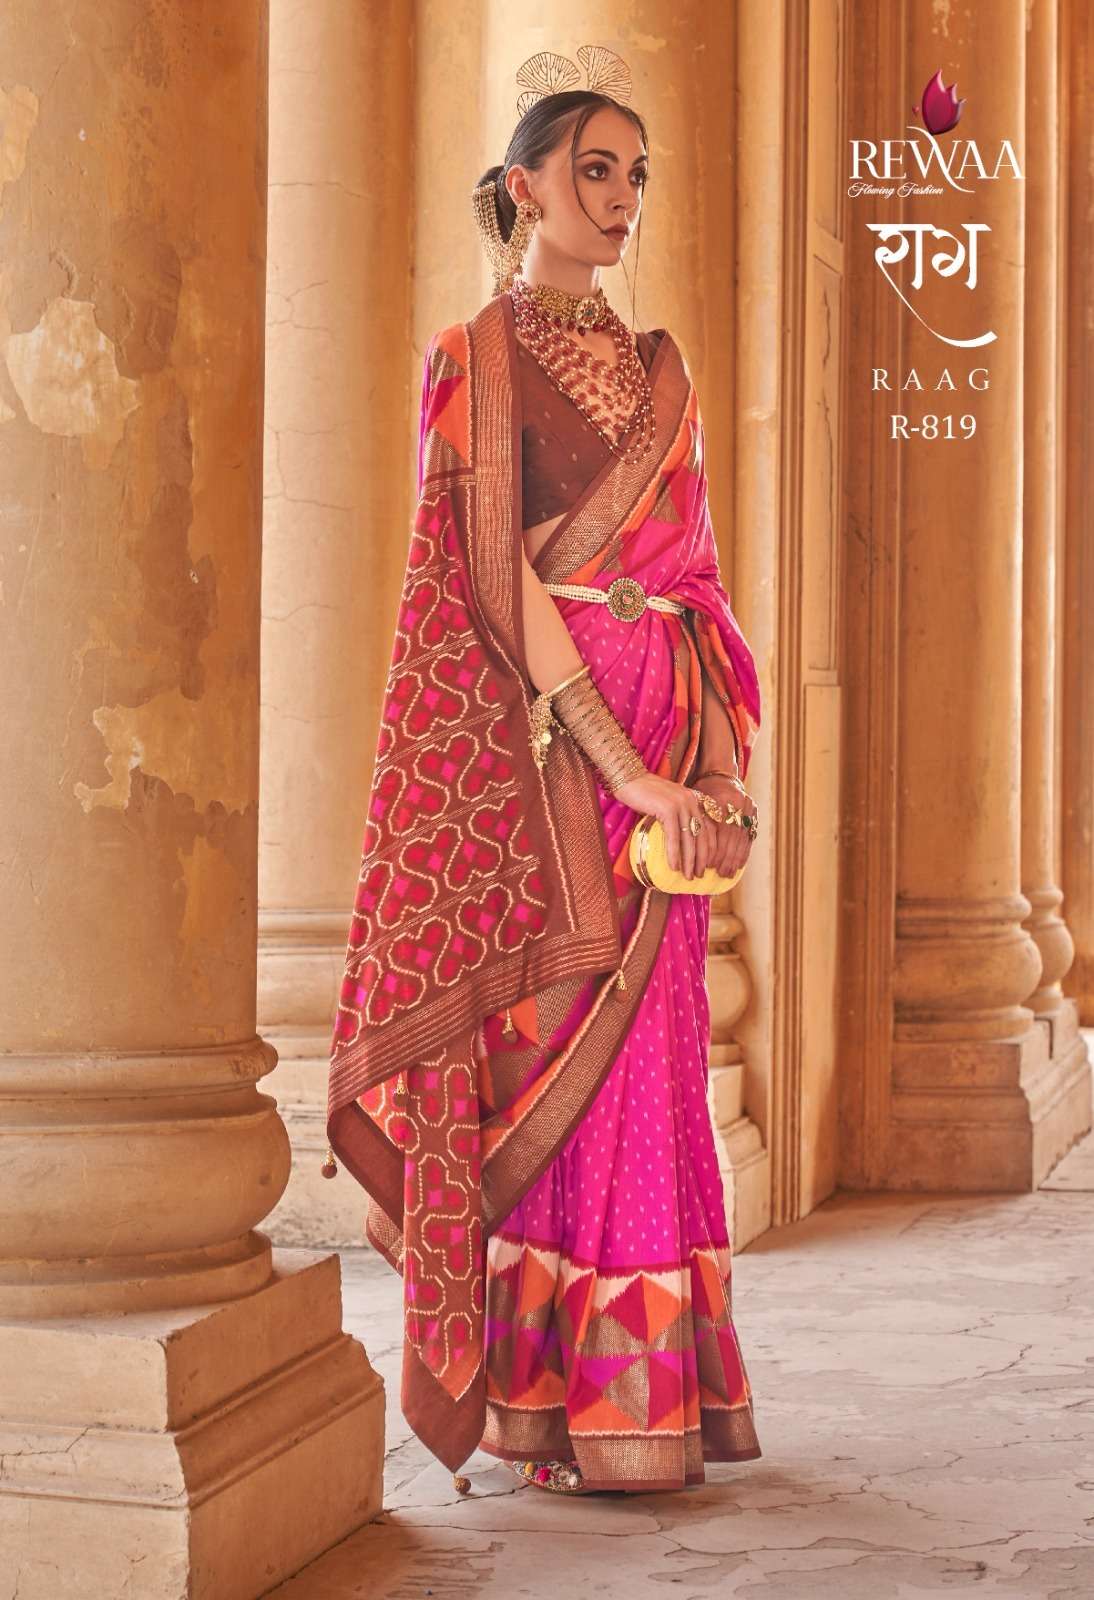 rewaa present raag three design four matching each saree wholesaler 